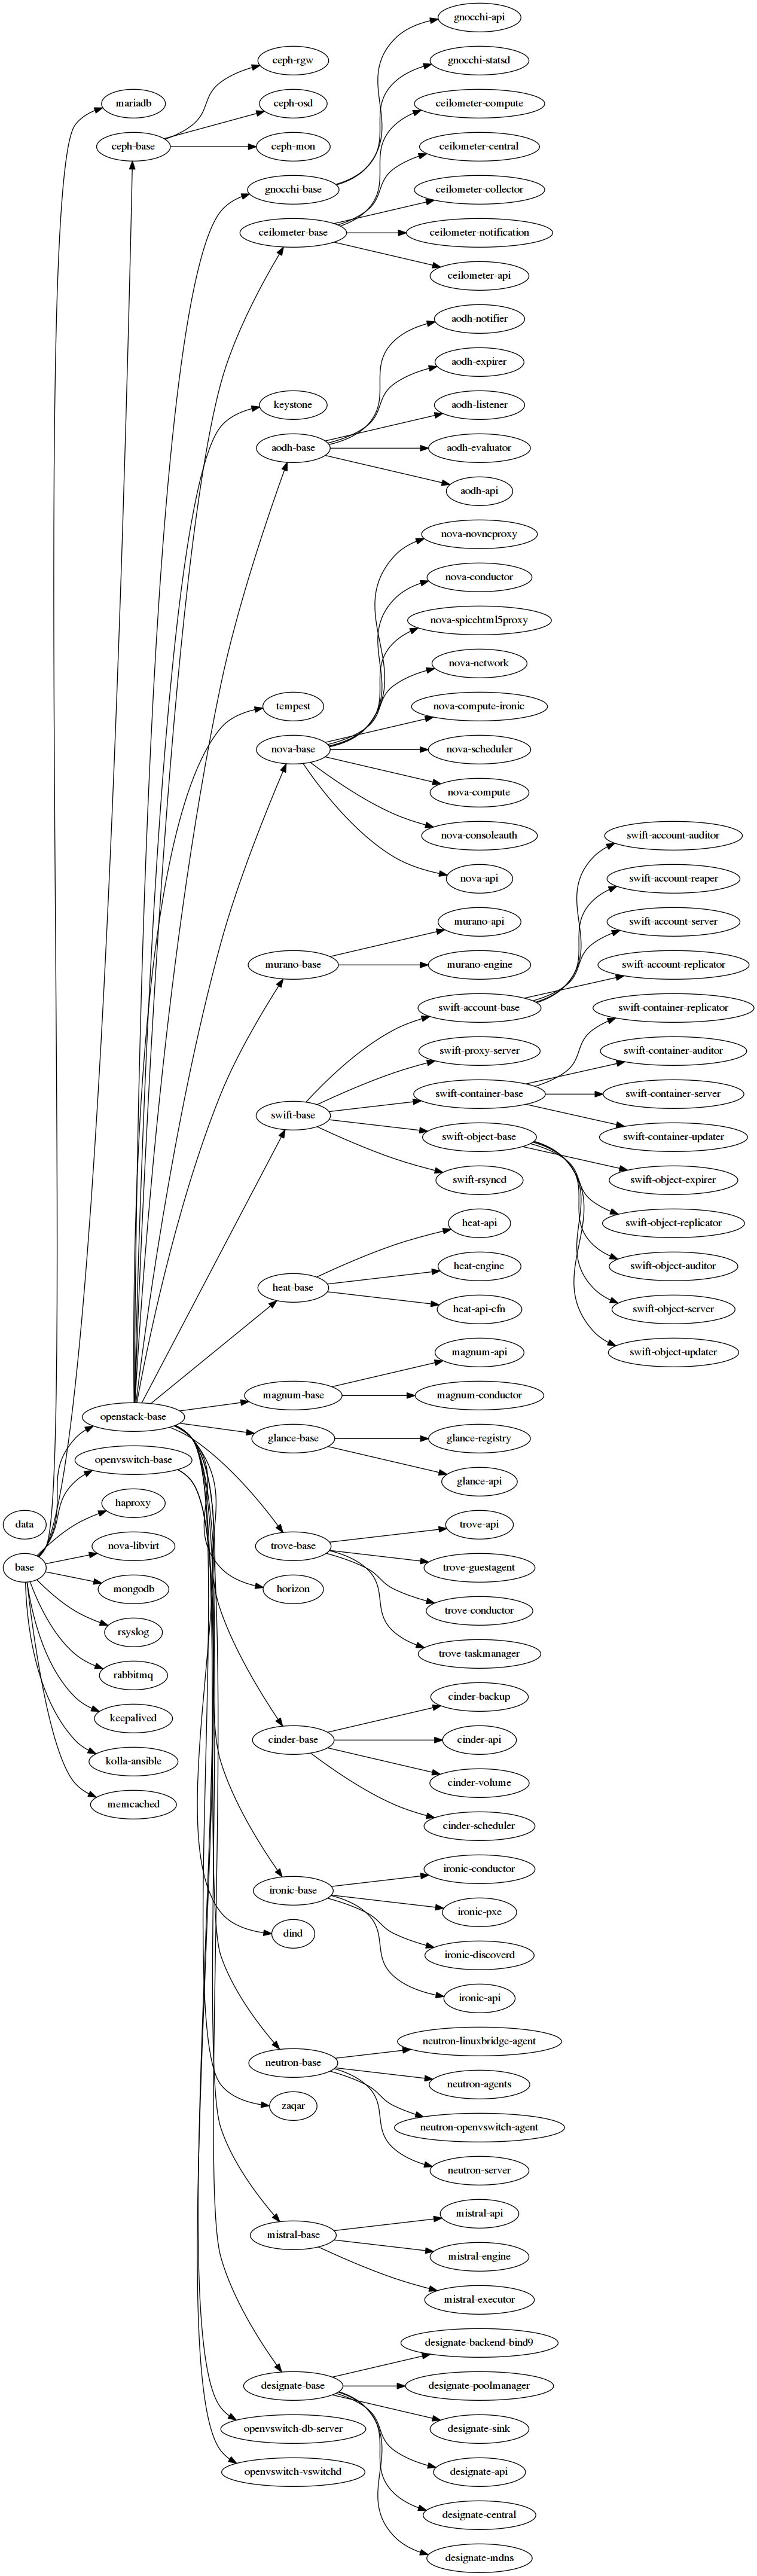 Kolla Image Dependency Tree